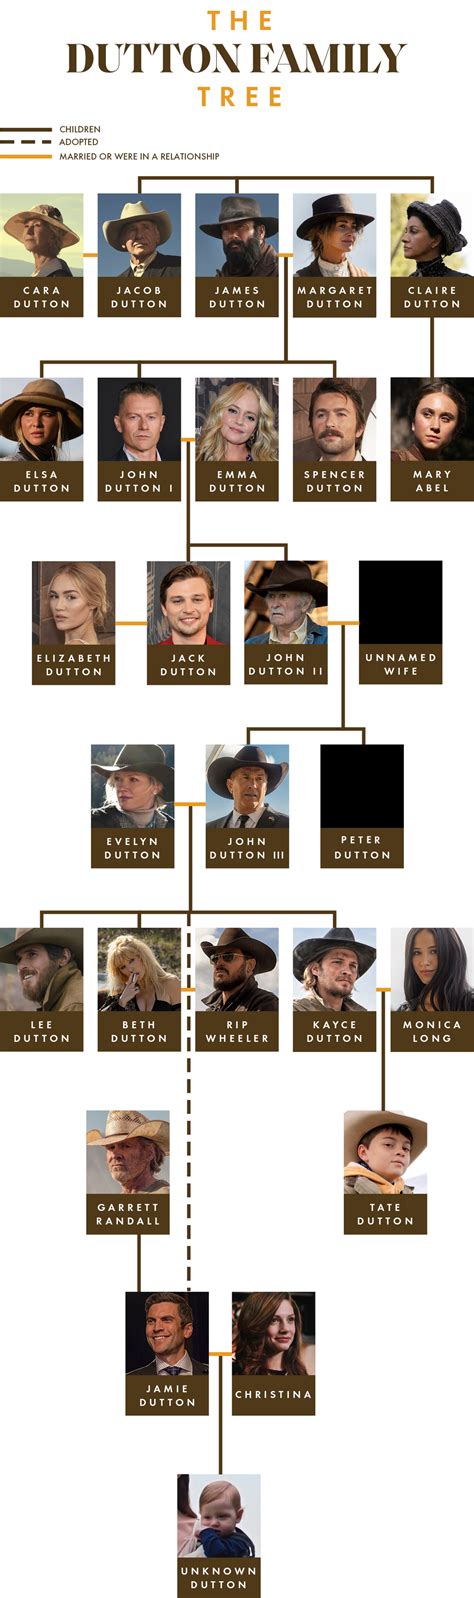 yellowstone cast dutton family tree